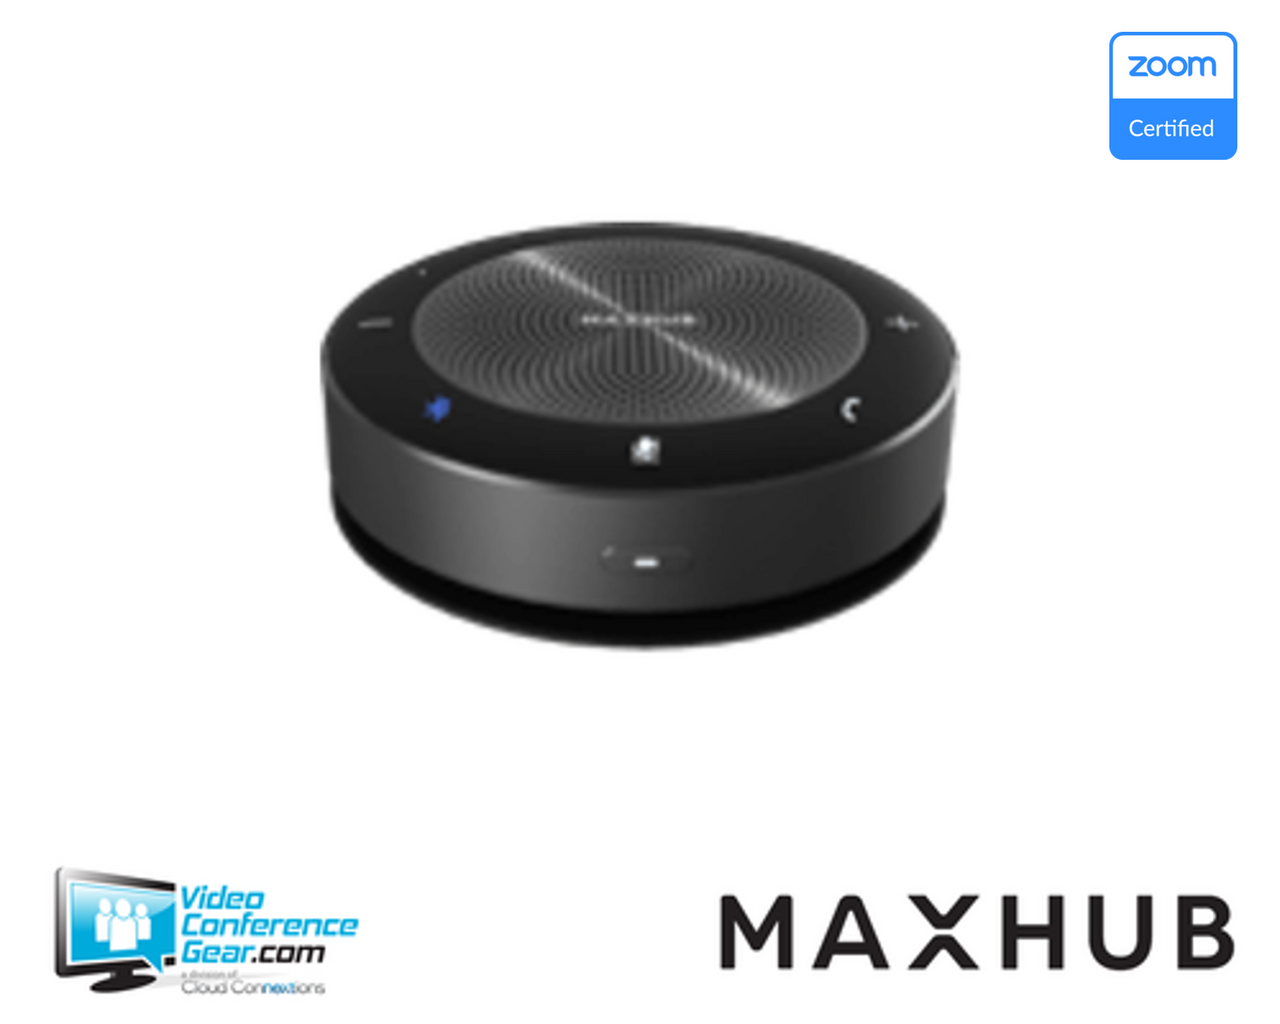 MAXHUB BM21 Bluetooth Tabletop Speakerphone, Wireless, USB Nub, 5 meter voice pickup, audio in/out jack